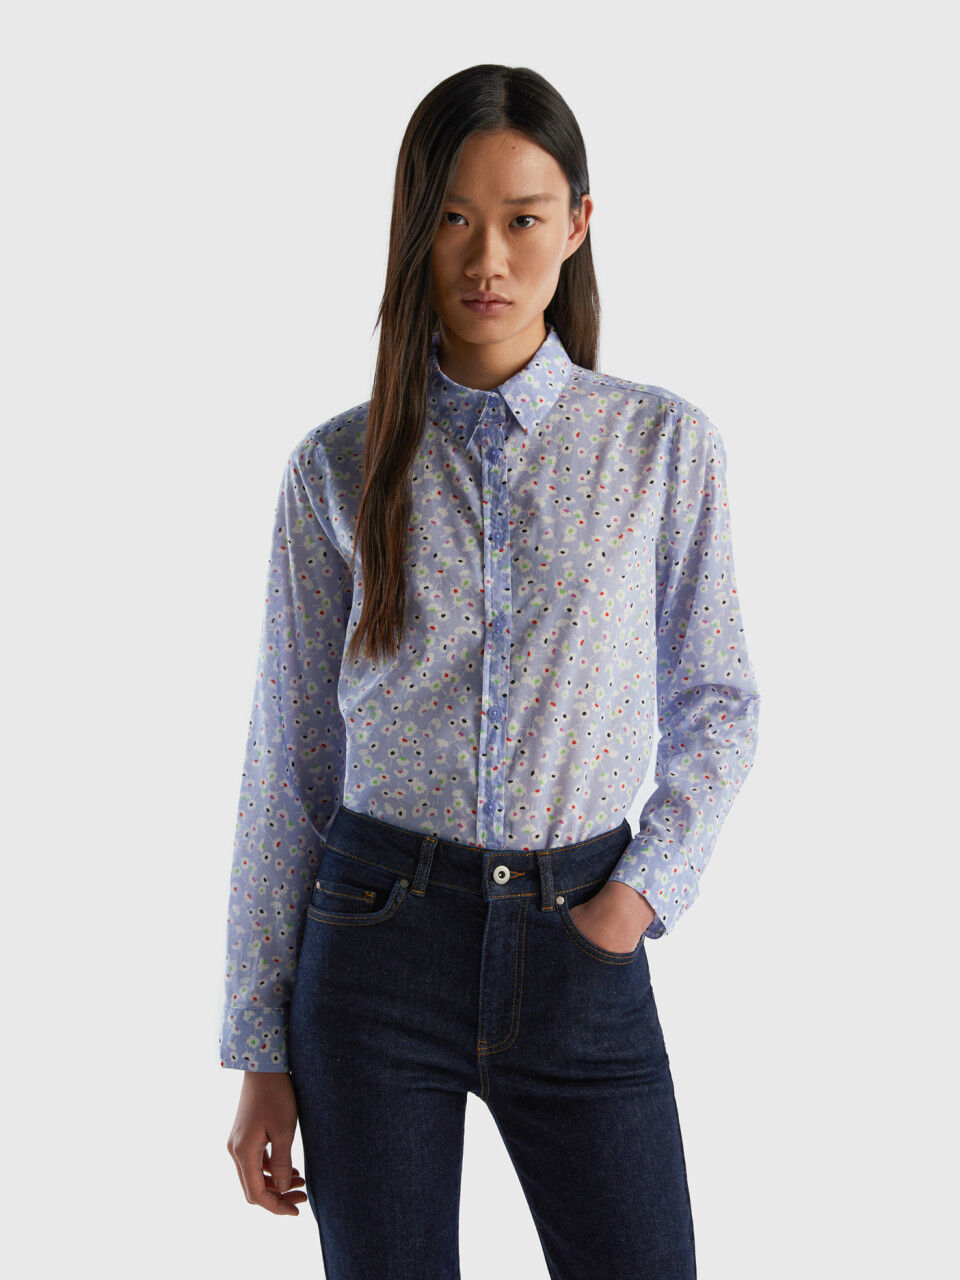 100% cotton patterned shirt